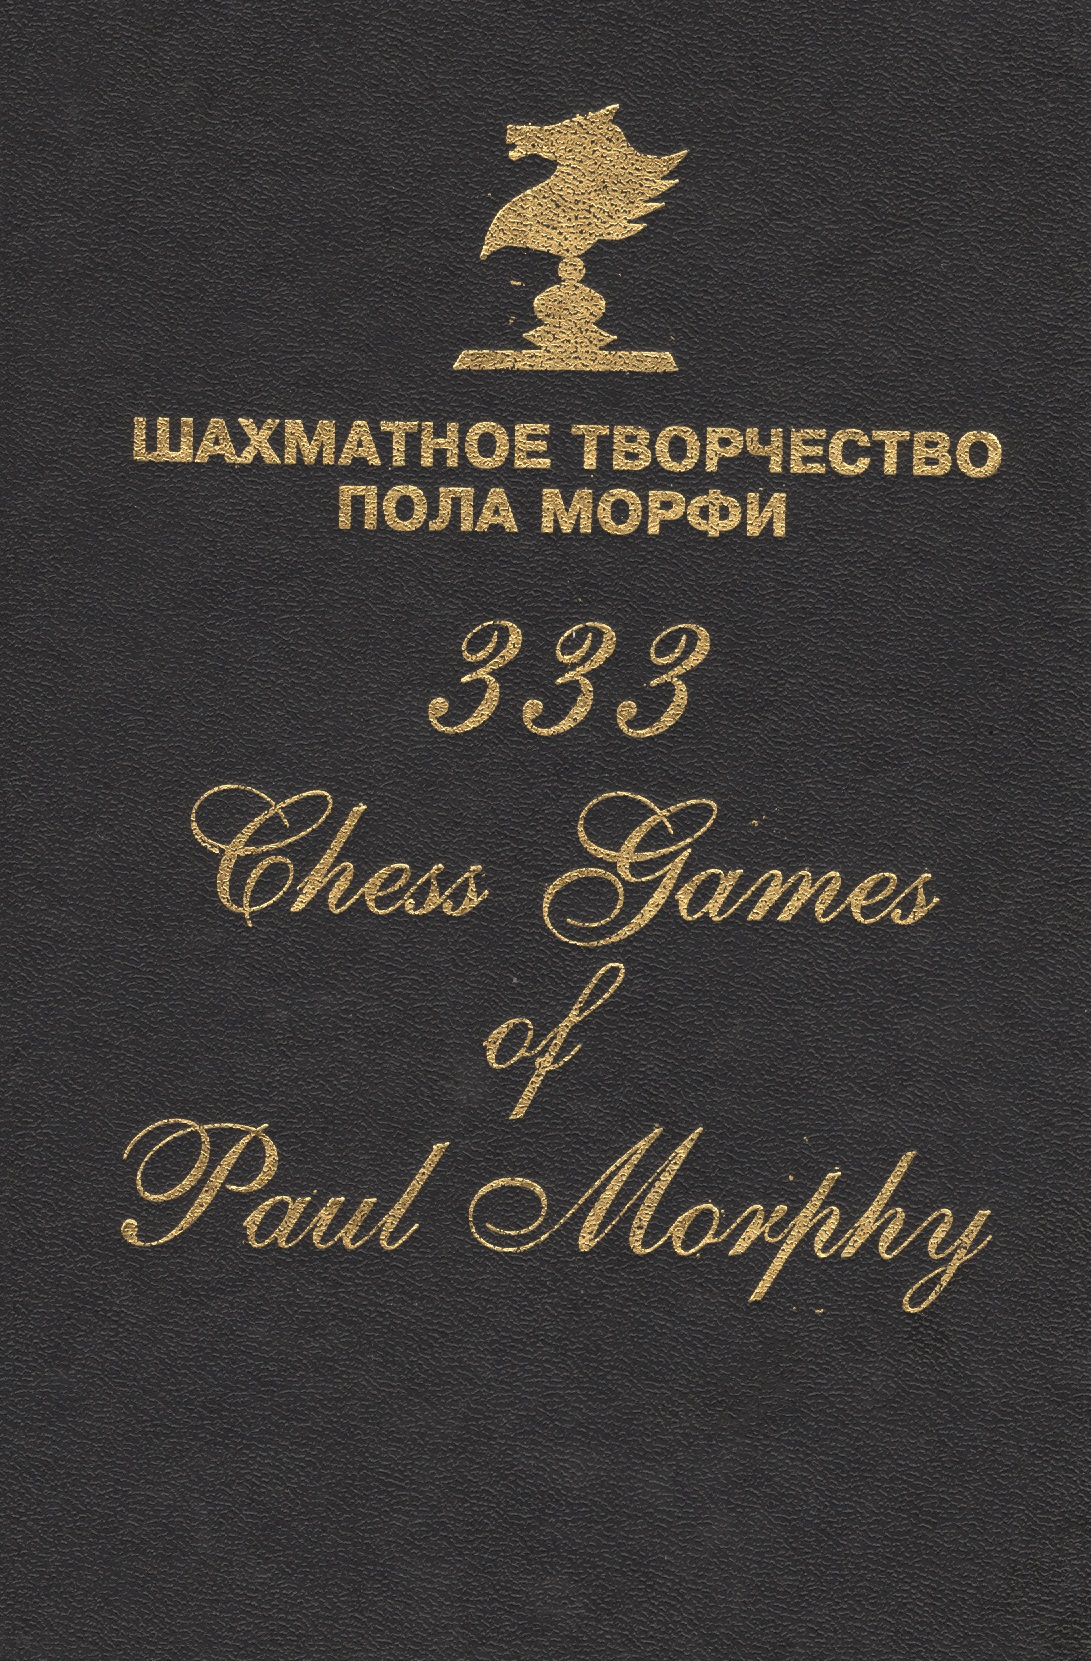 Шахматное творчество Пола Морфи 333 Chess games of Paul Morphy (Сафиуллин) левенфиш григорий книга начинающего шахматиста